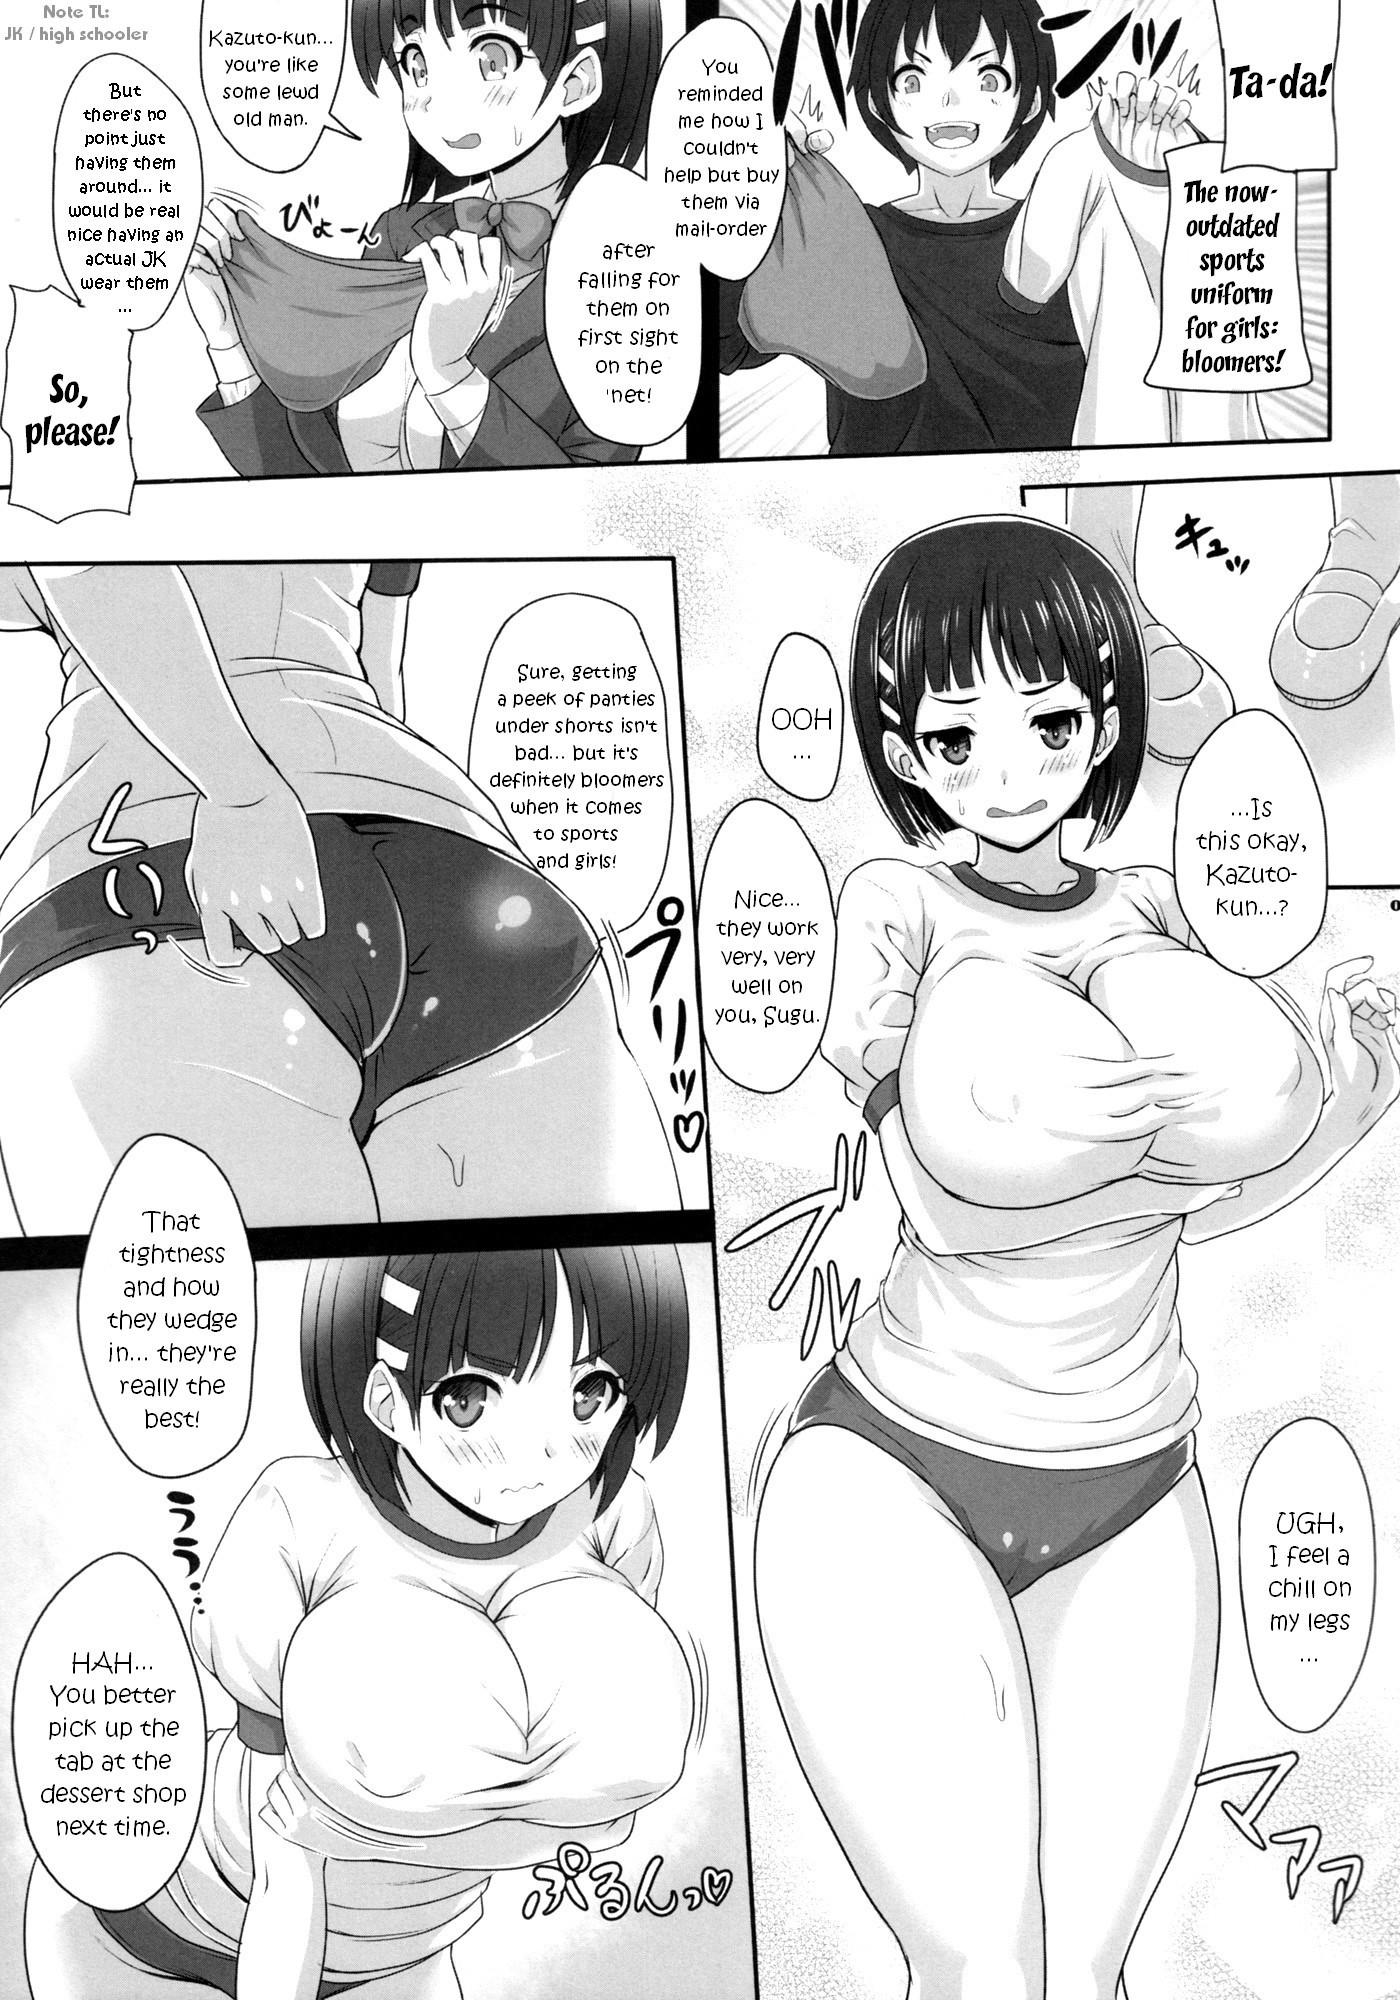 SAOff AUTUMN hentai manga picture 3